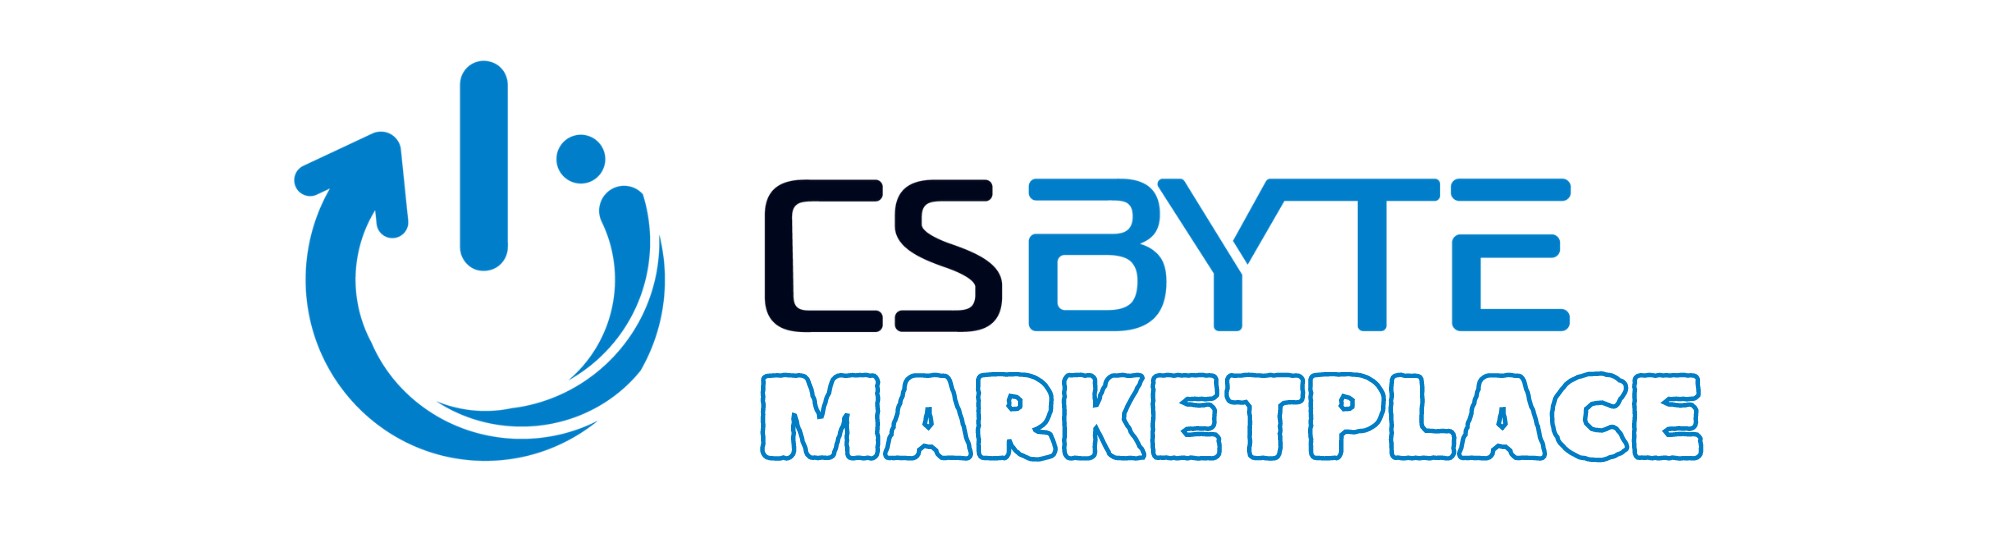 CSBYTE Marketplace